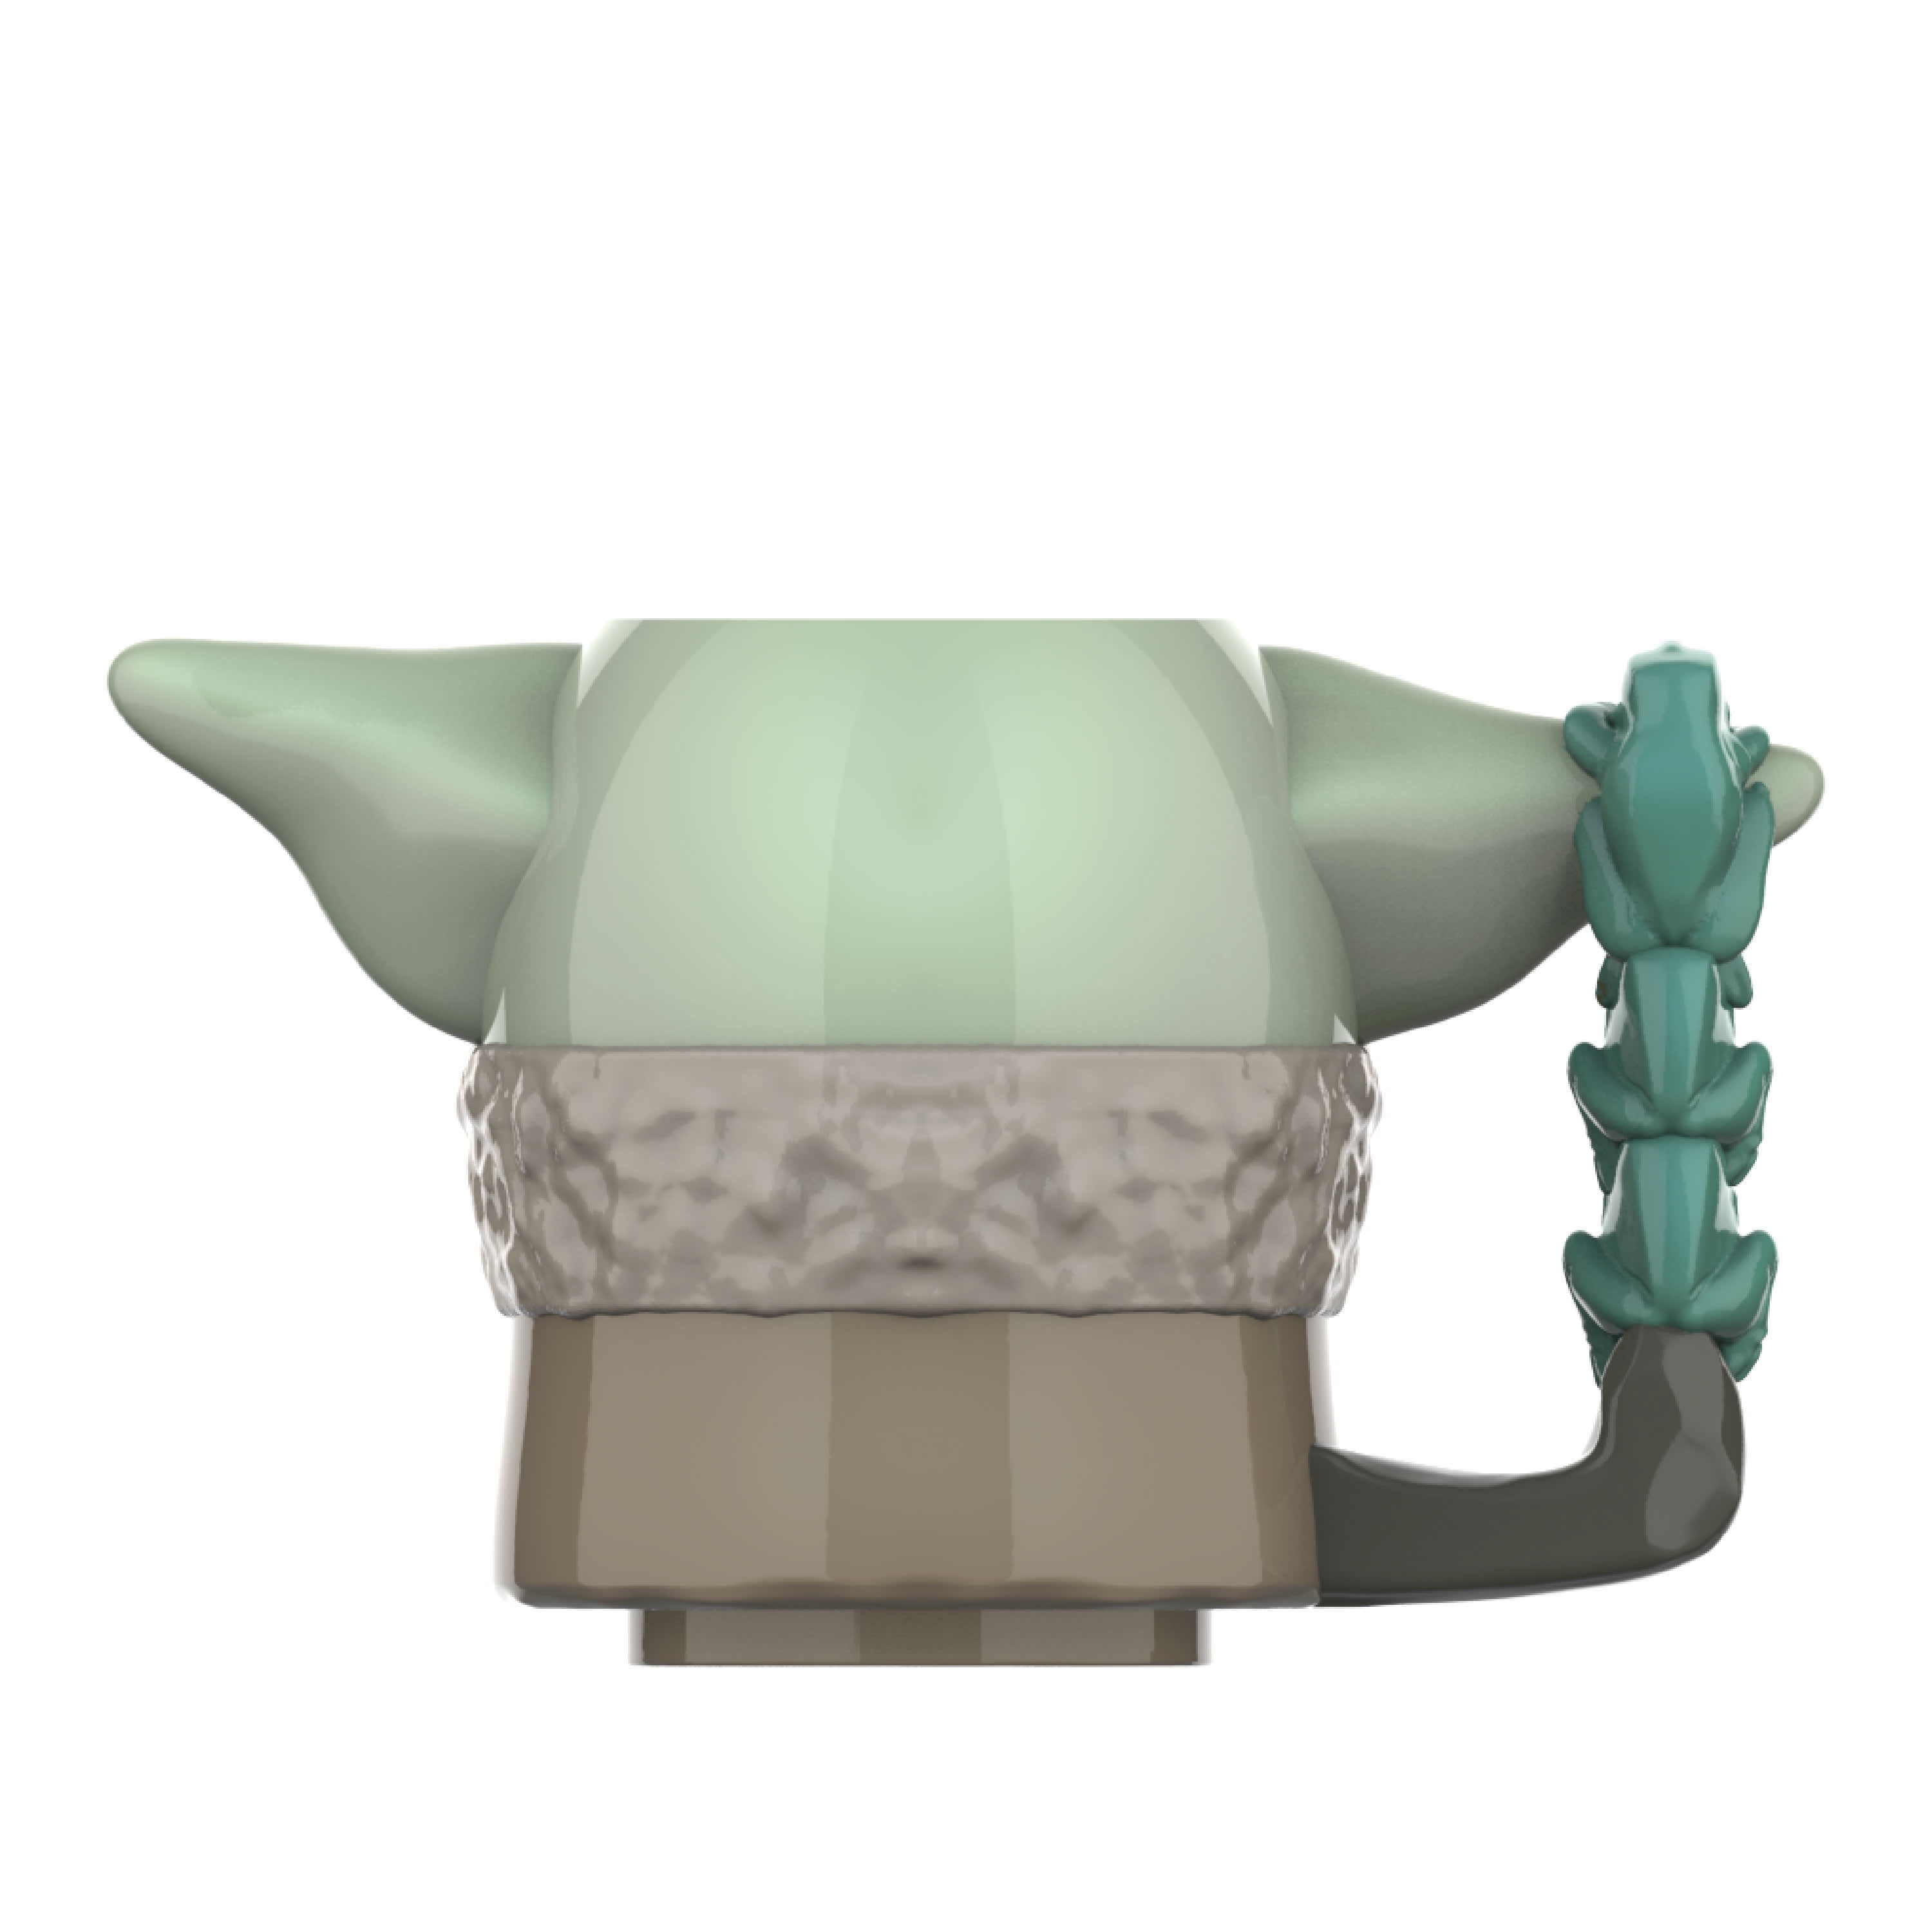 Star Wars™ The Mandalorian™ —<br/>20 oz Sculpted Mug Set